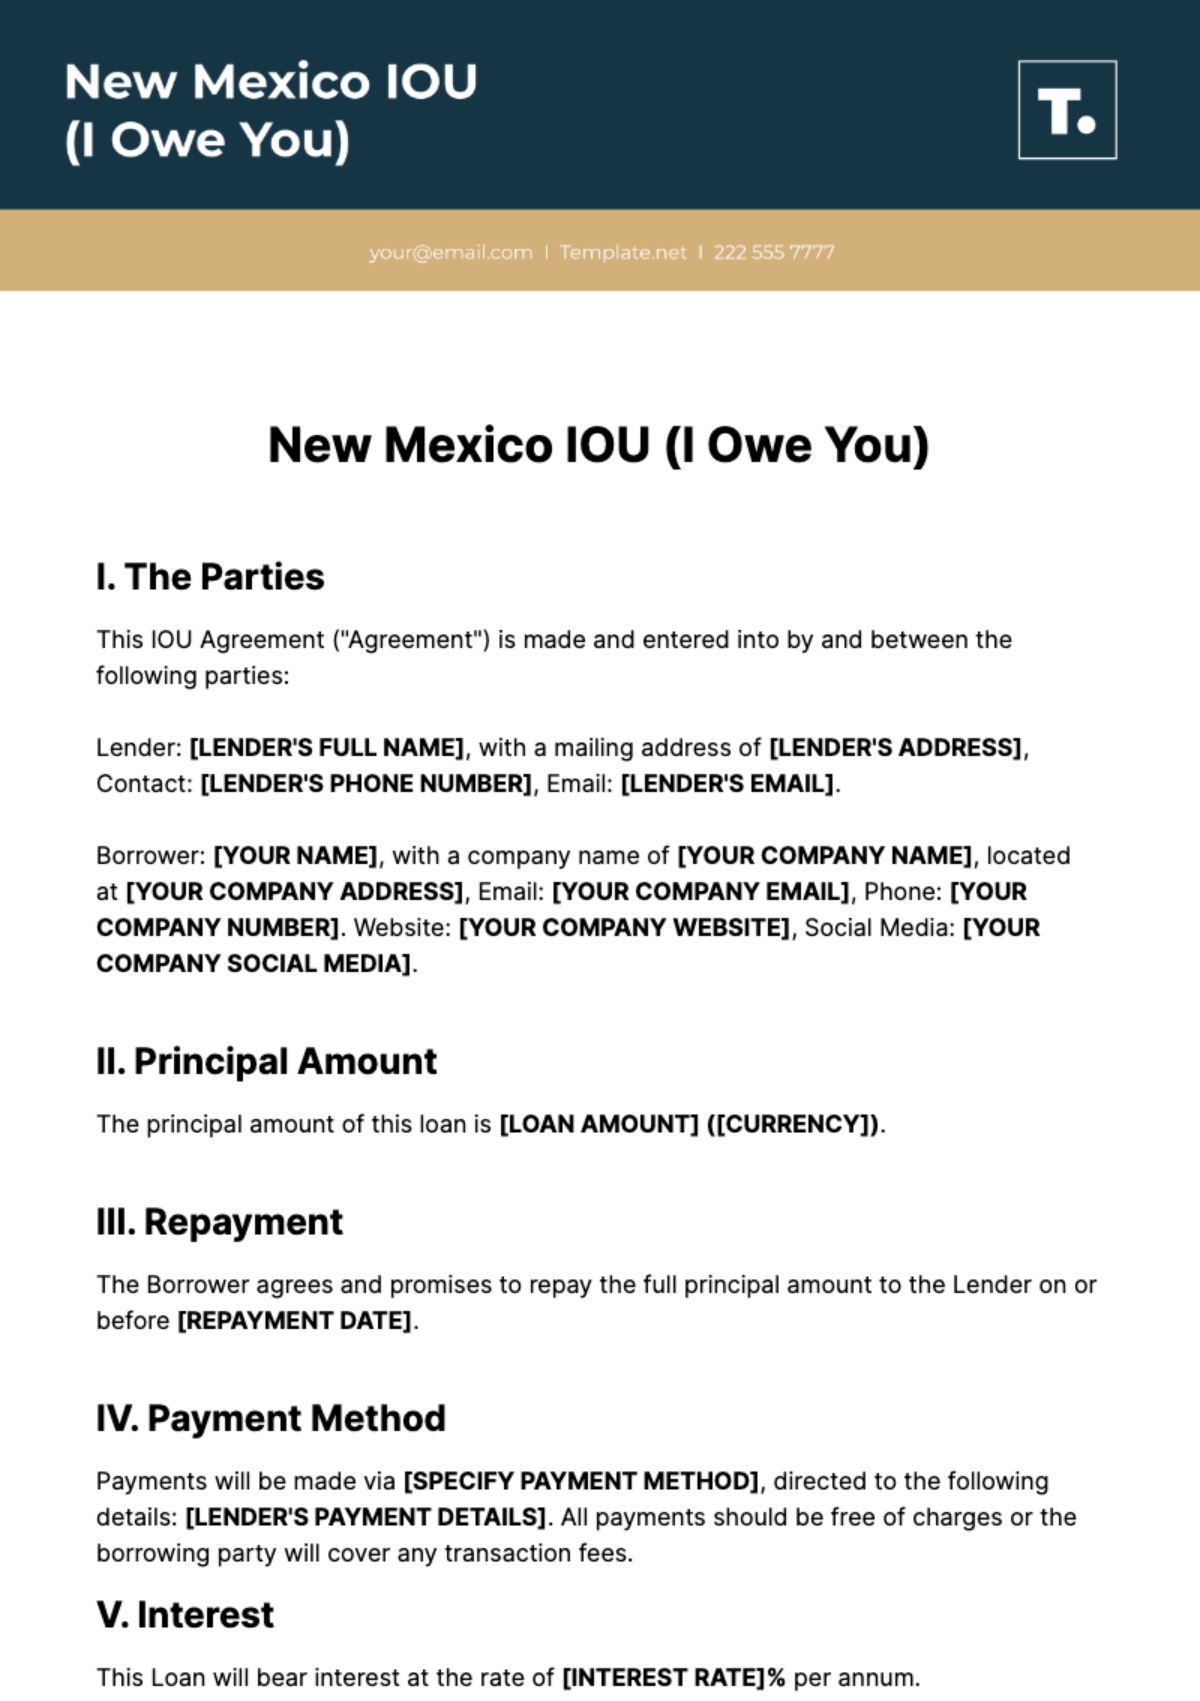 New Mexico IOU Template